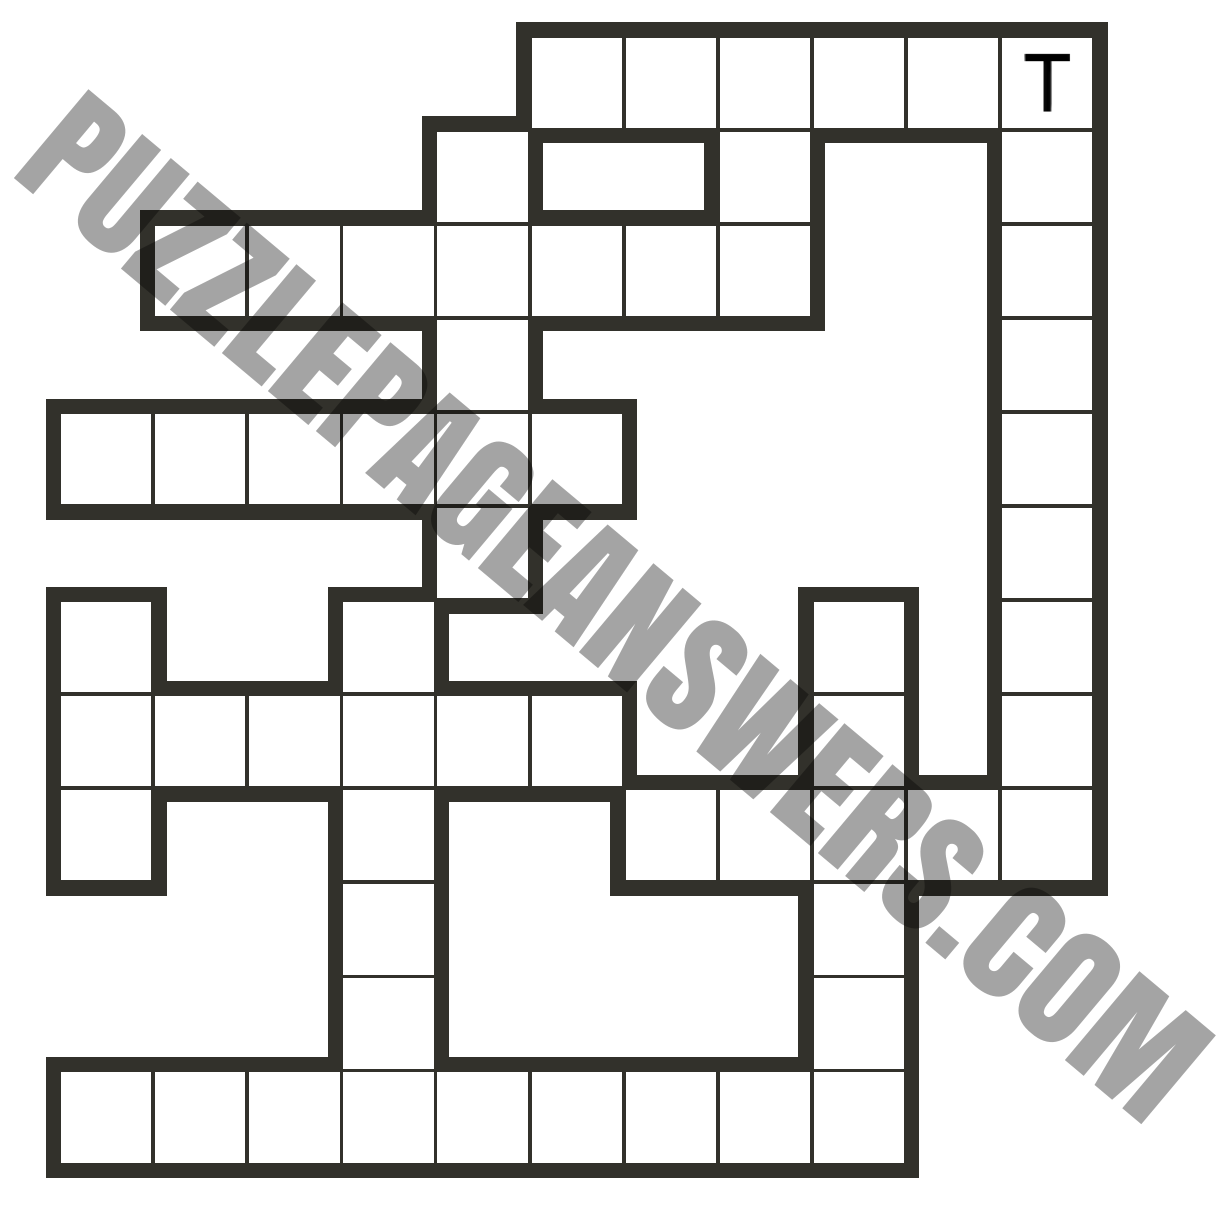 Puzzle Page One Clue April 4 2020 PuzzlePageAnswers com